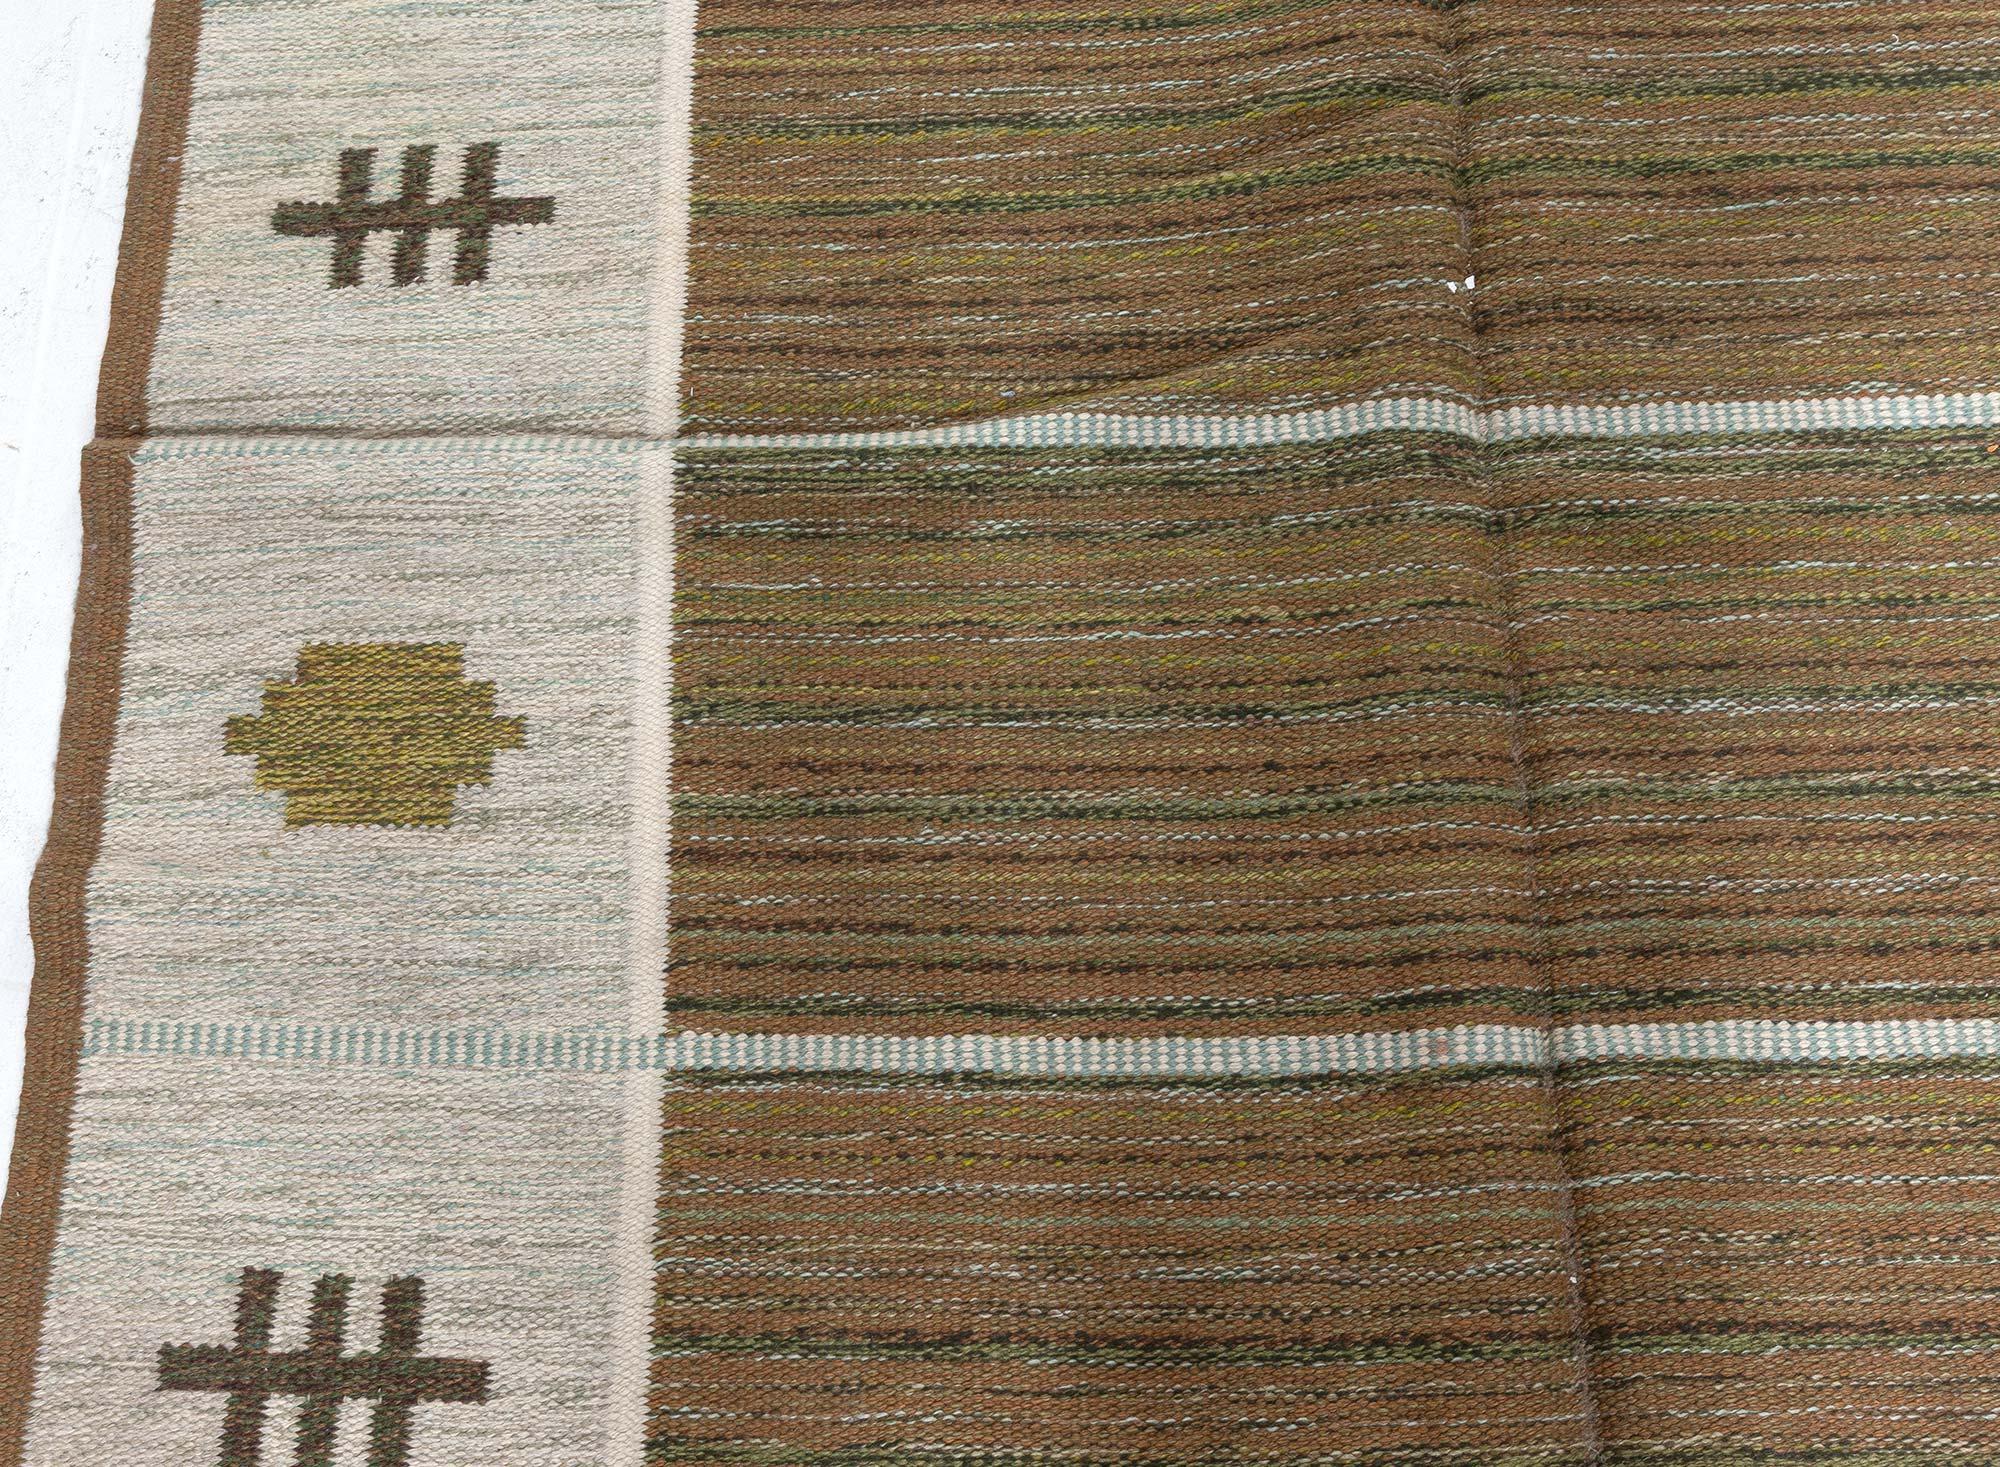 Mid-Century Brown Swedish handmade Wool Rug by Aina Kånge
Size: 5'2